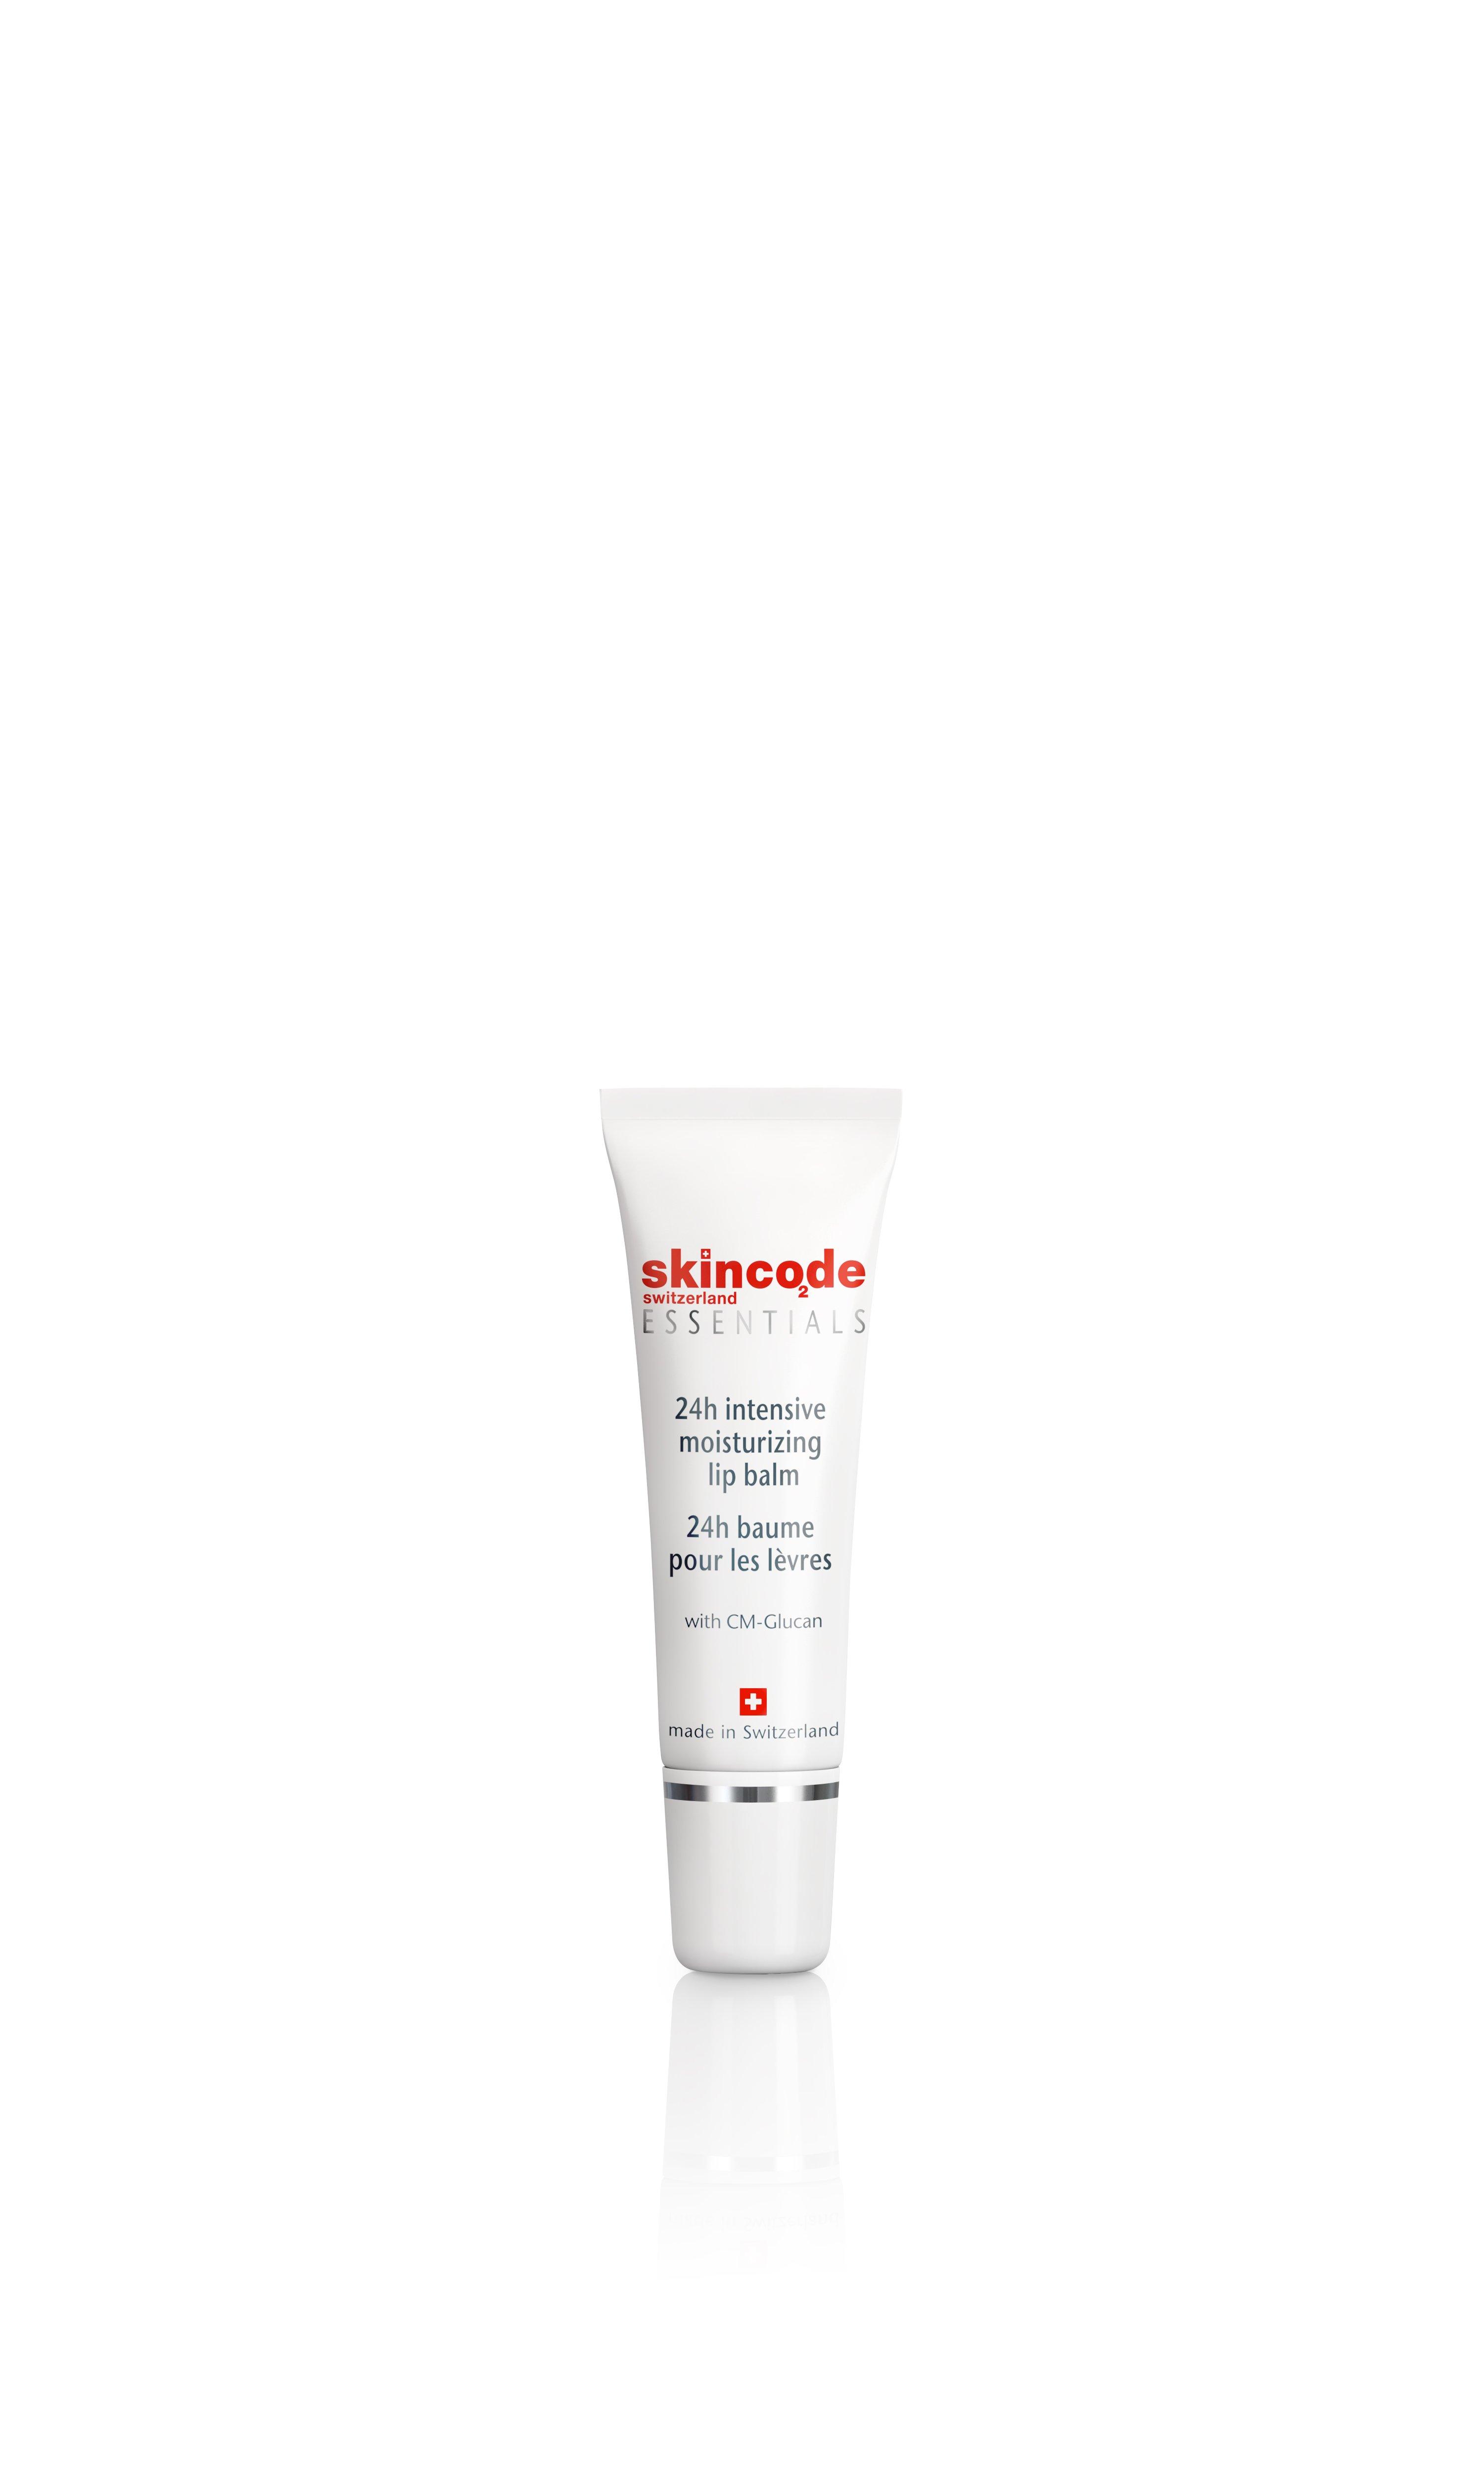 Image of skincode 24h int lip balm 24h intensive moisturizing lip balm - 10ml